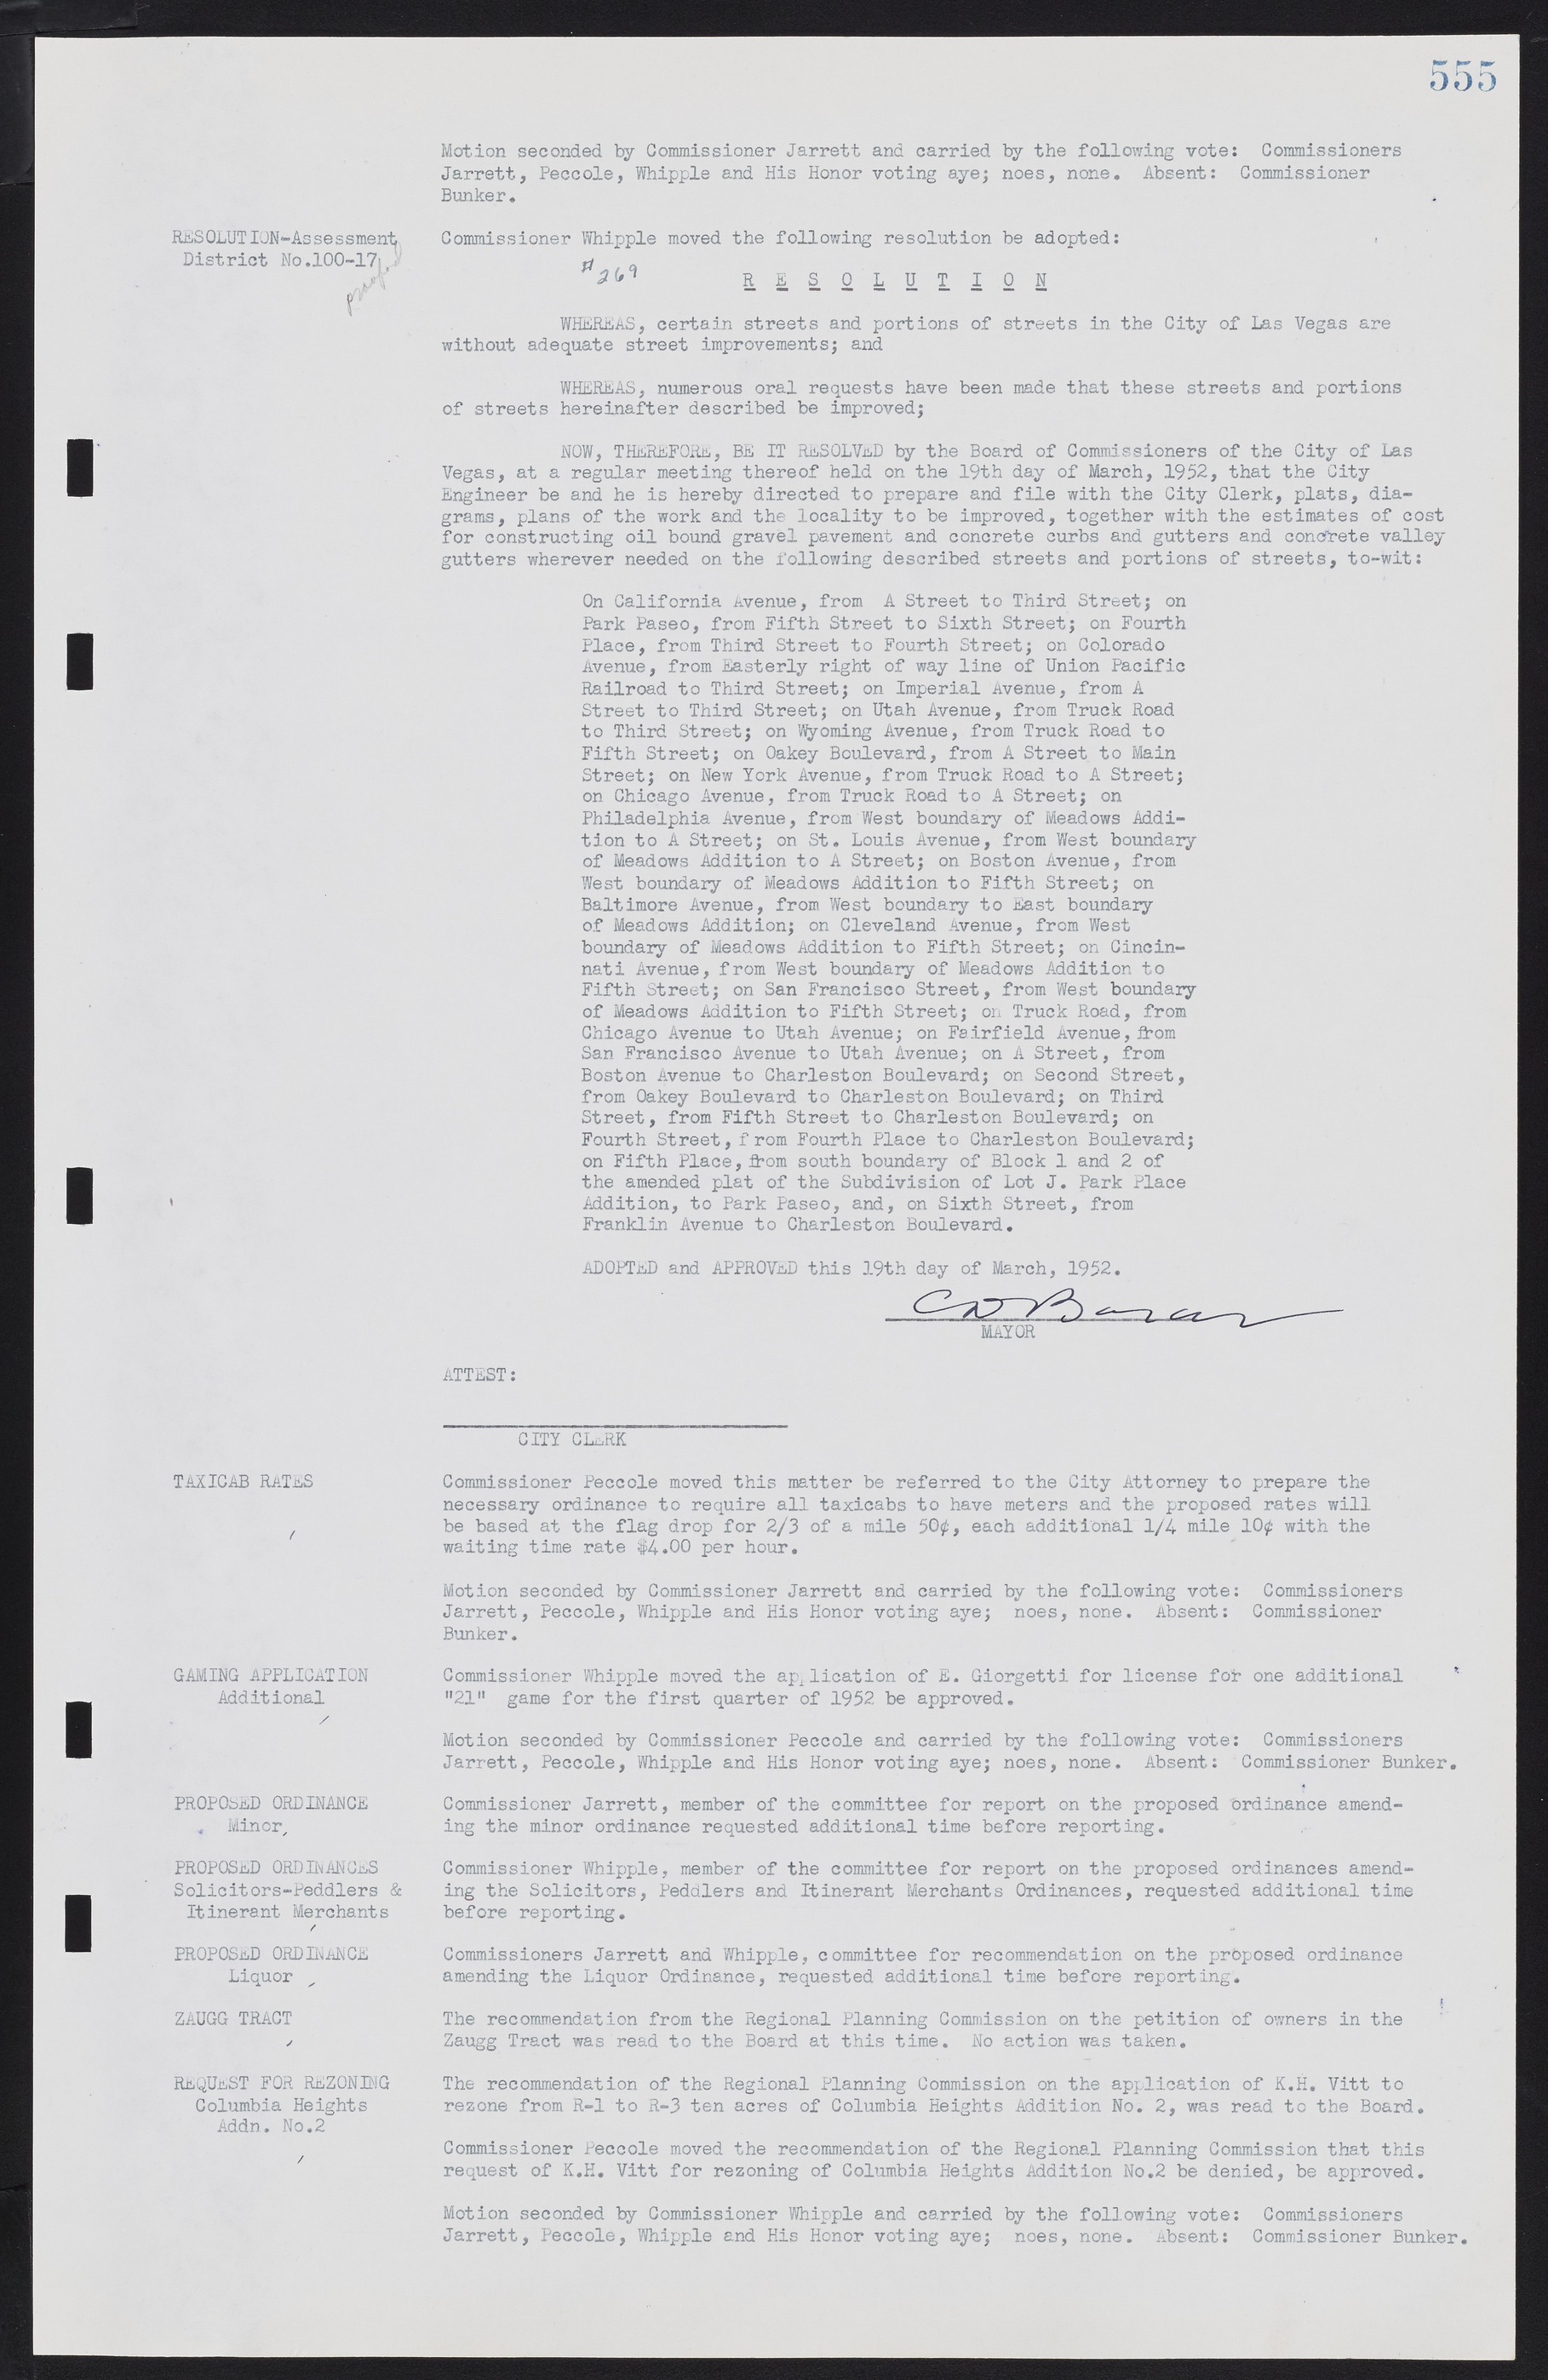 Las Vegas City Commission Minutes, November 7, 1949 to May 21, 1952, lvc000007-573